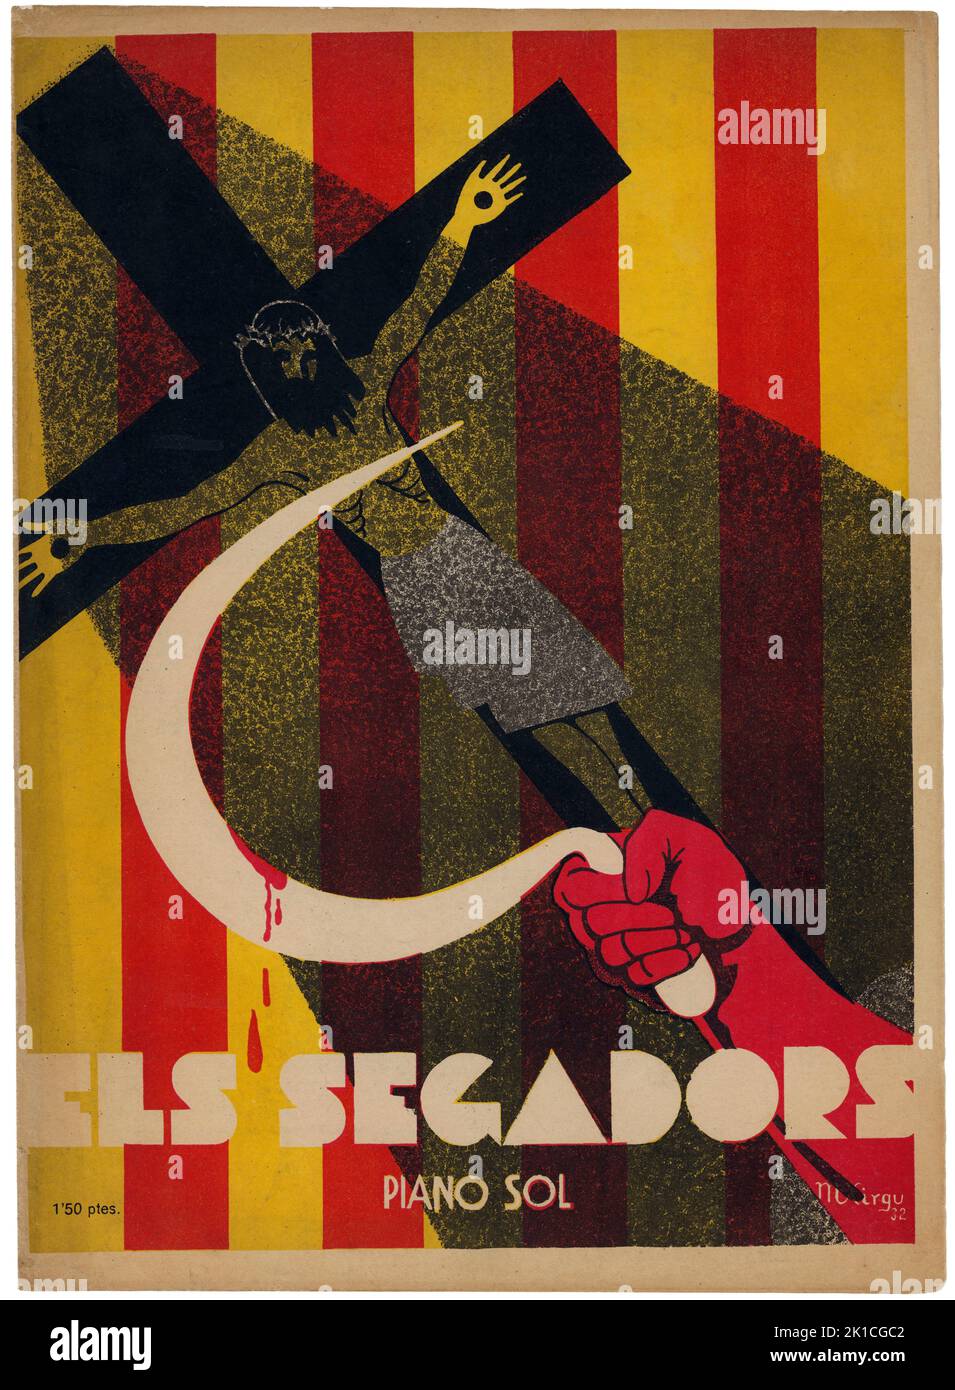 Partitura Musical del himno catalán Els Segadors. Barcelona, año 1932. Stockfoto